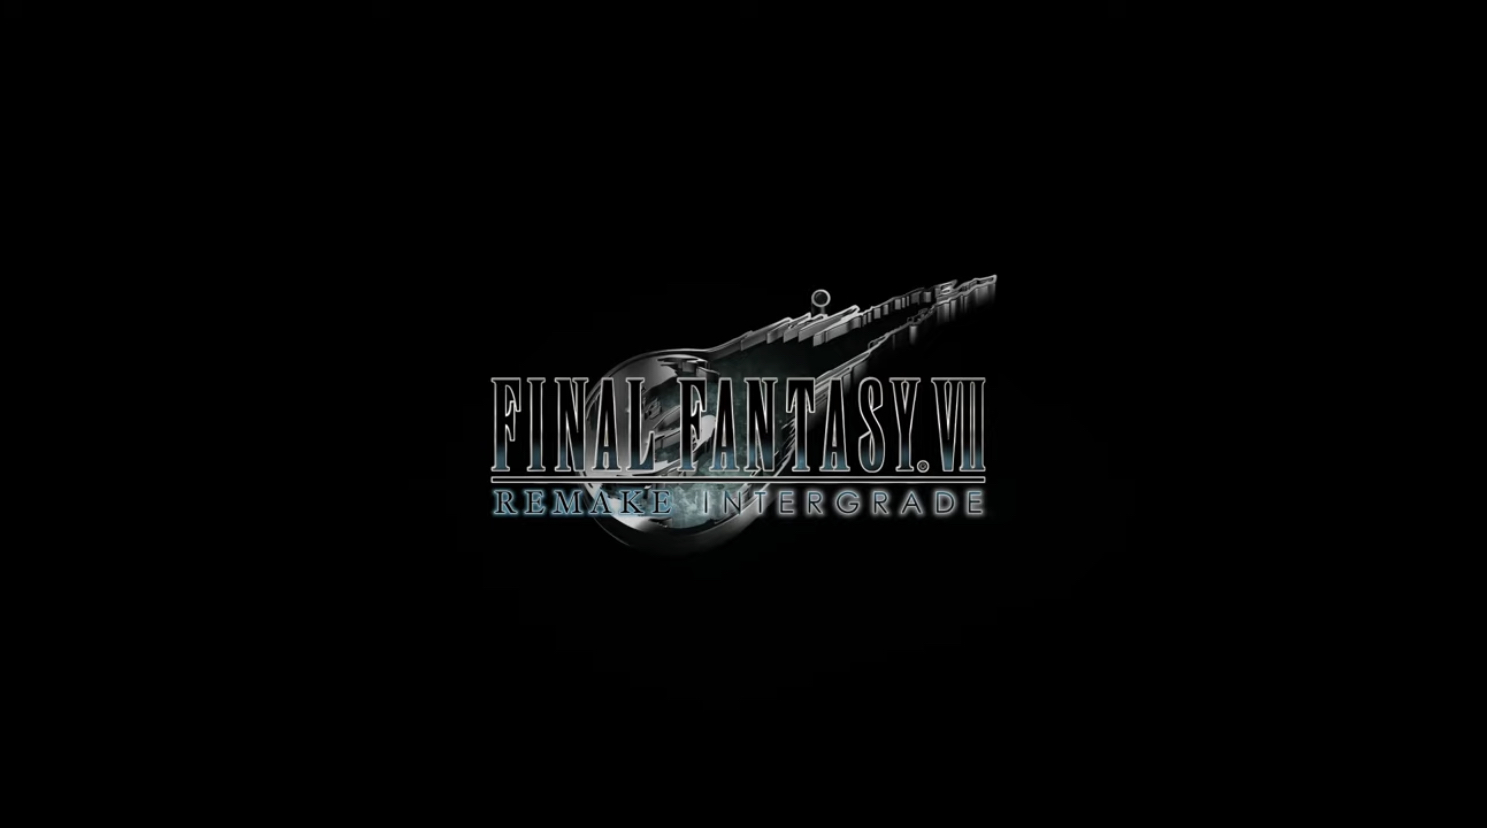 Final Fantasy VII Remake Intergrade Announced for PS5